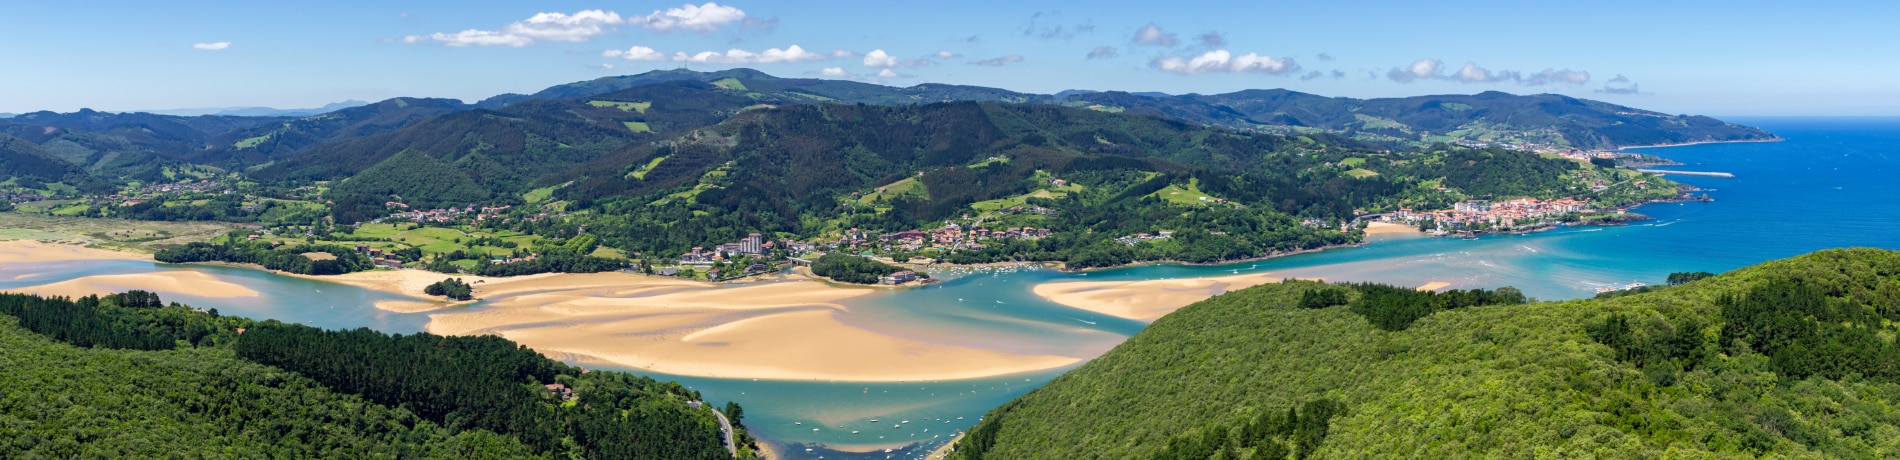 Paesi baschi | Eden Viaggi